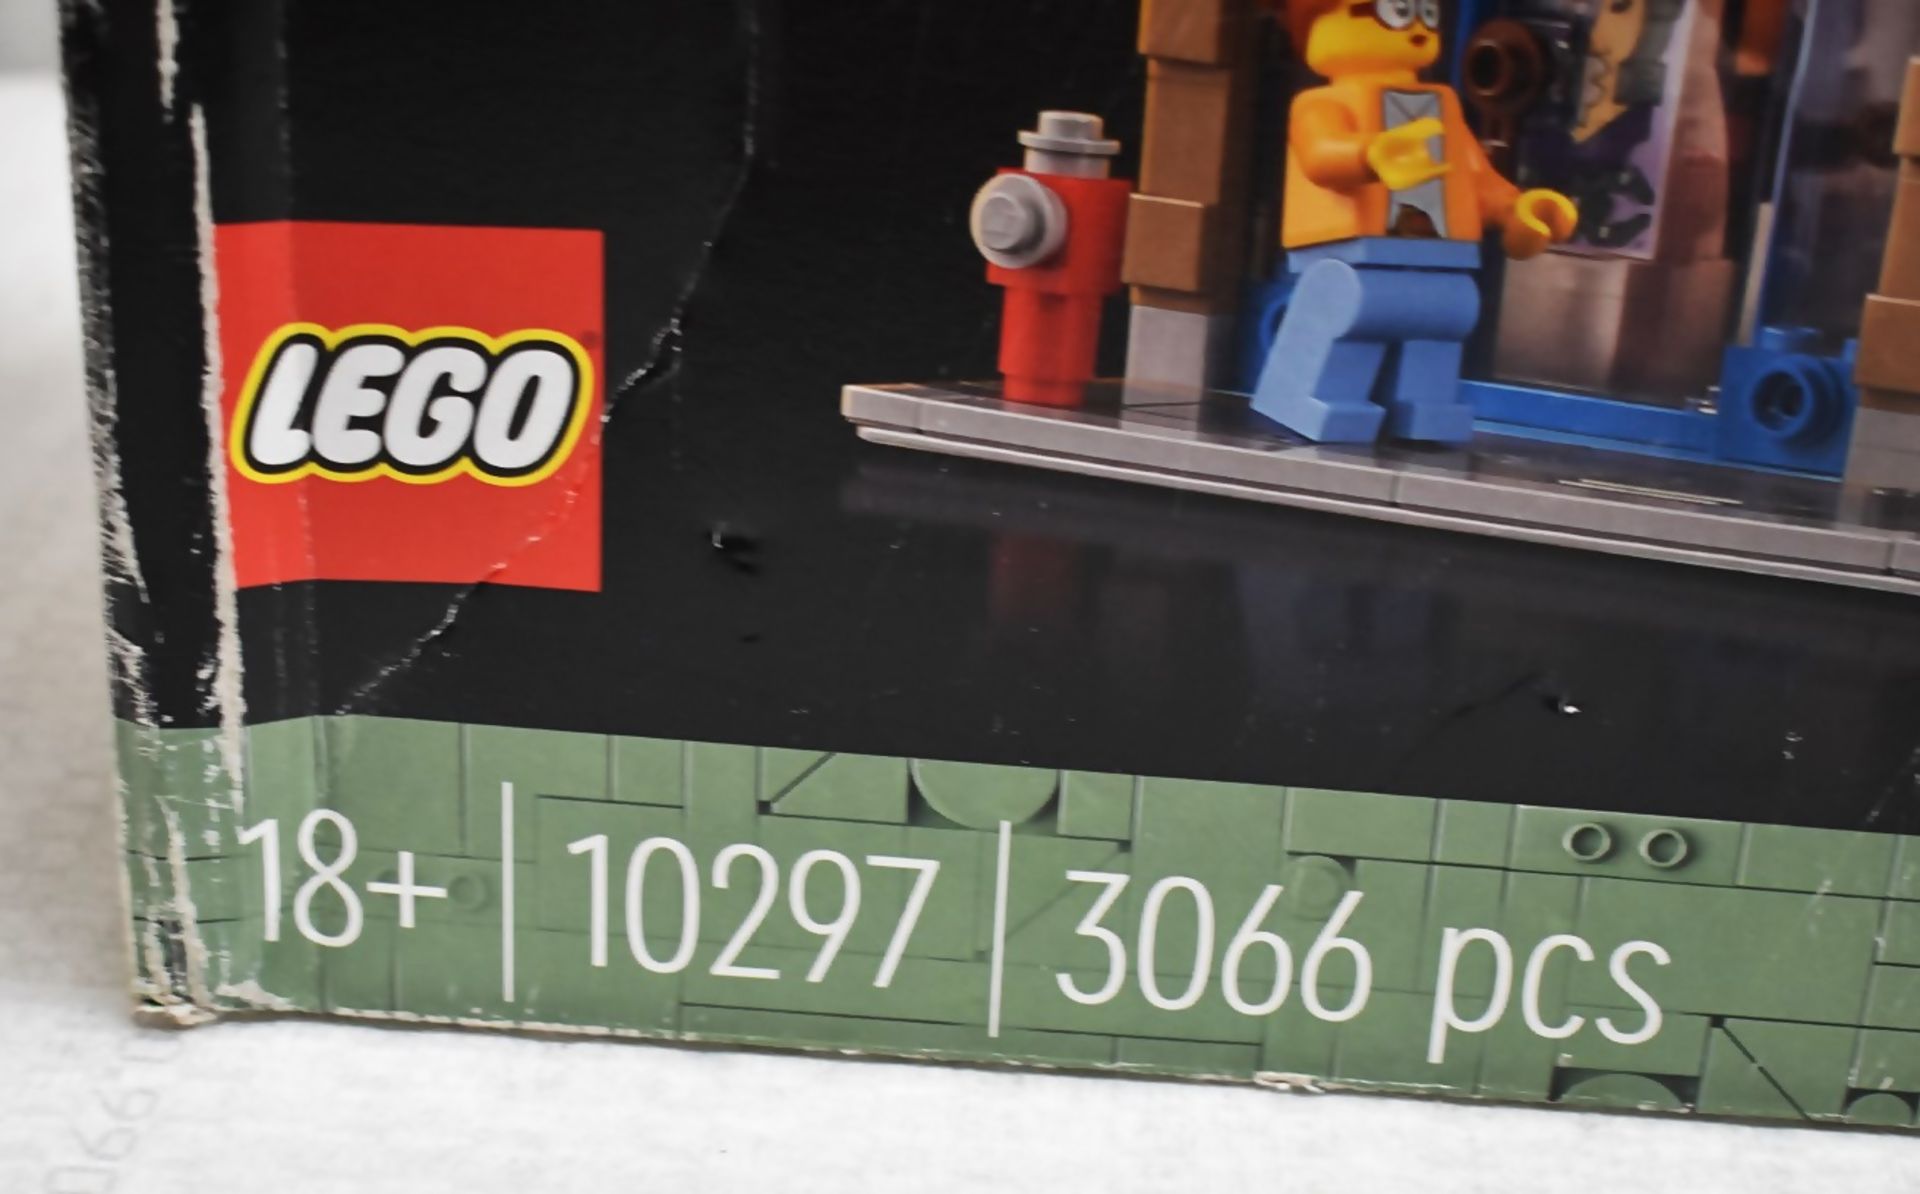 1 x LEGO Boutique Hotel Modular Brick Building Set (10297) - Original Price £199.00 - Boxed Stock - Image 5 of 5